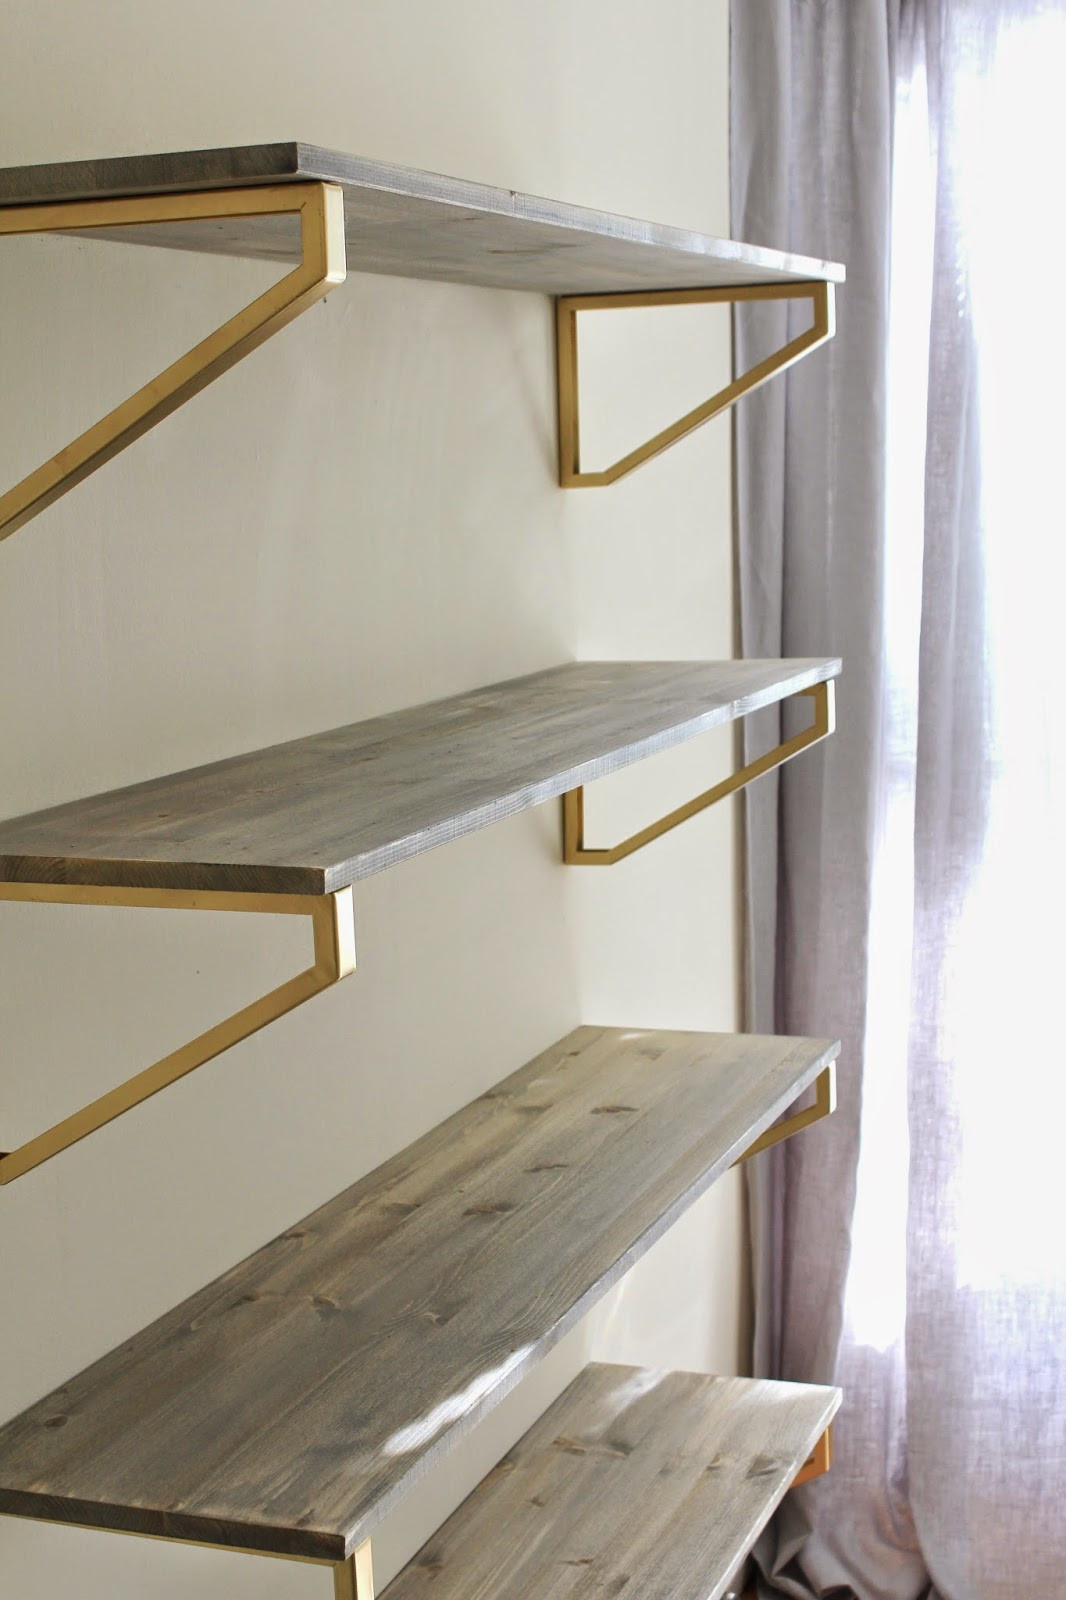 Best ideas about DIY Wood Shelf Brackets
. Save or Pin Cup Half Full Rustic Wood Shelf DIY Now.